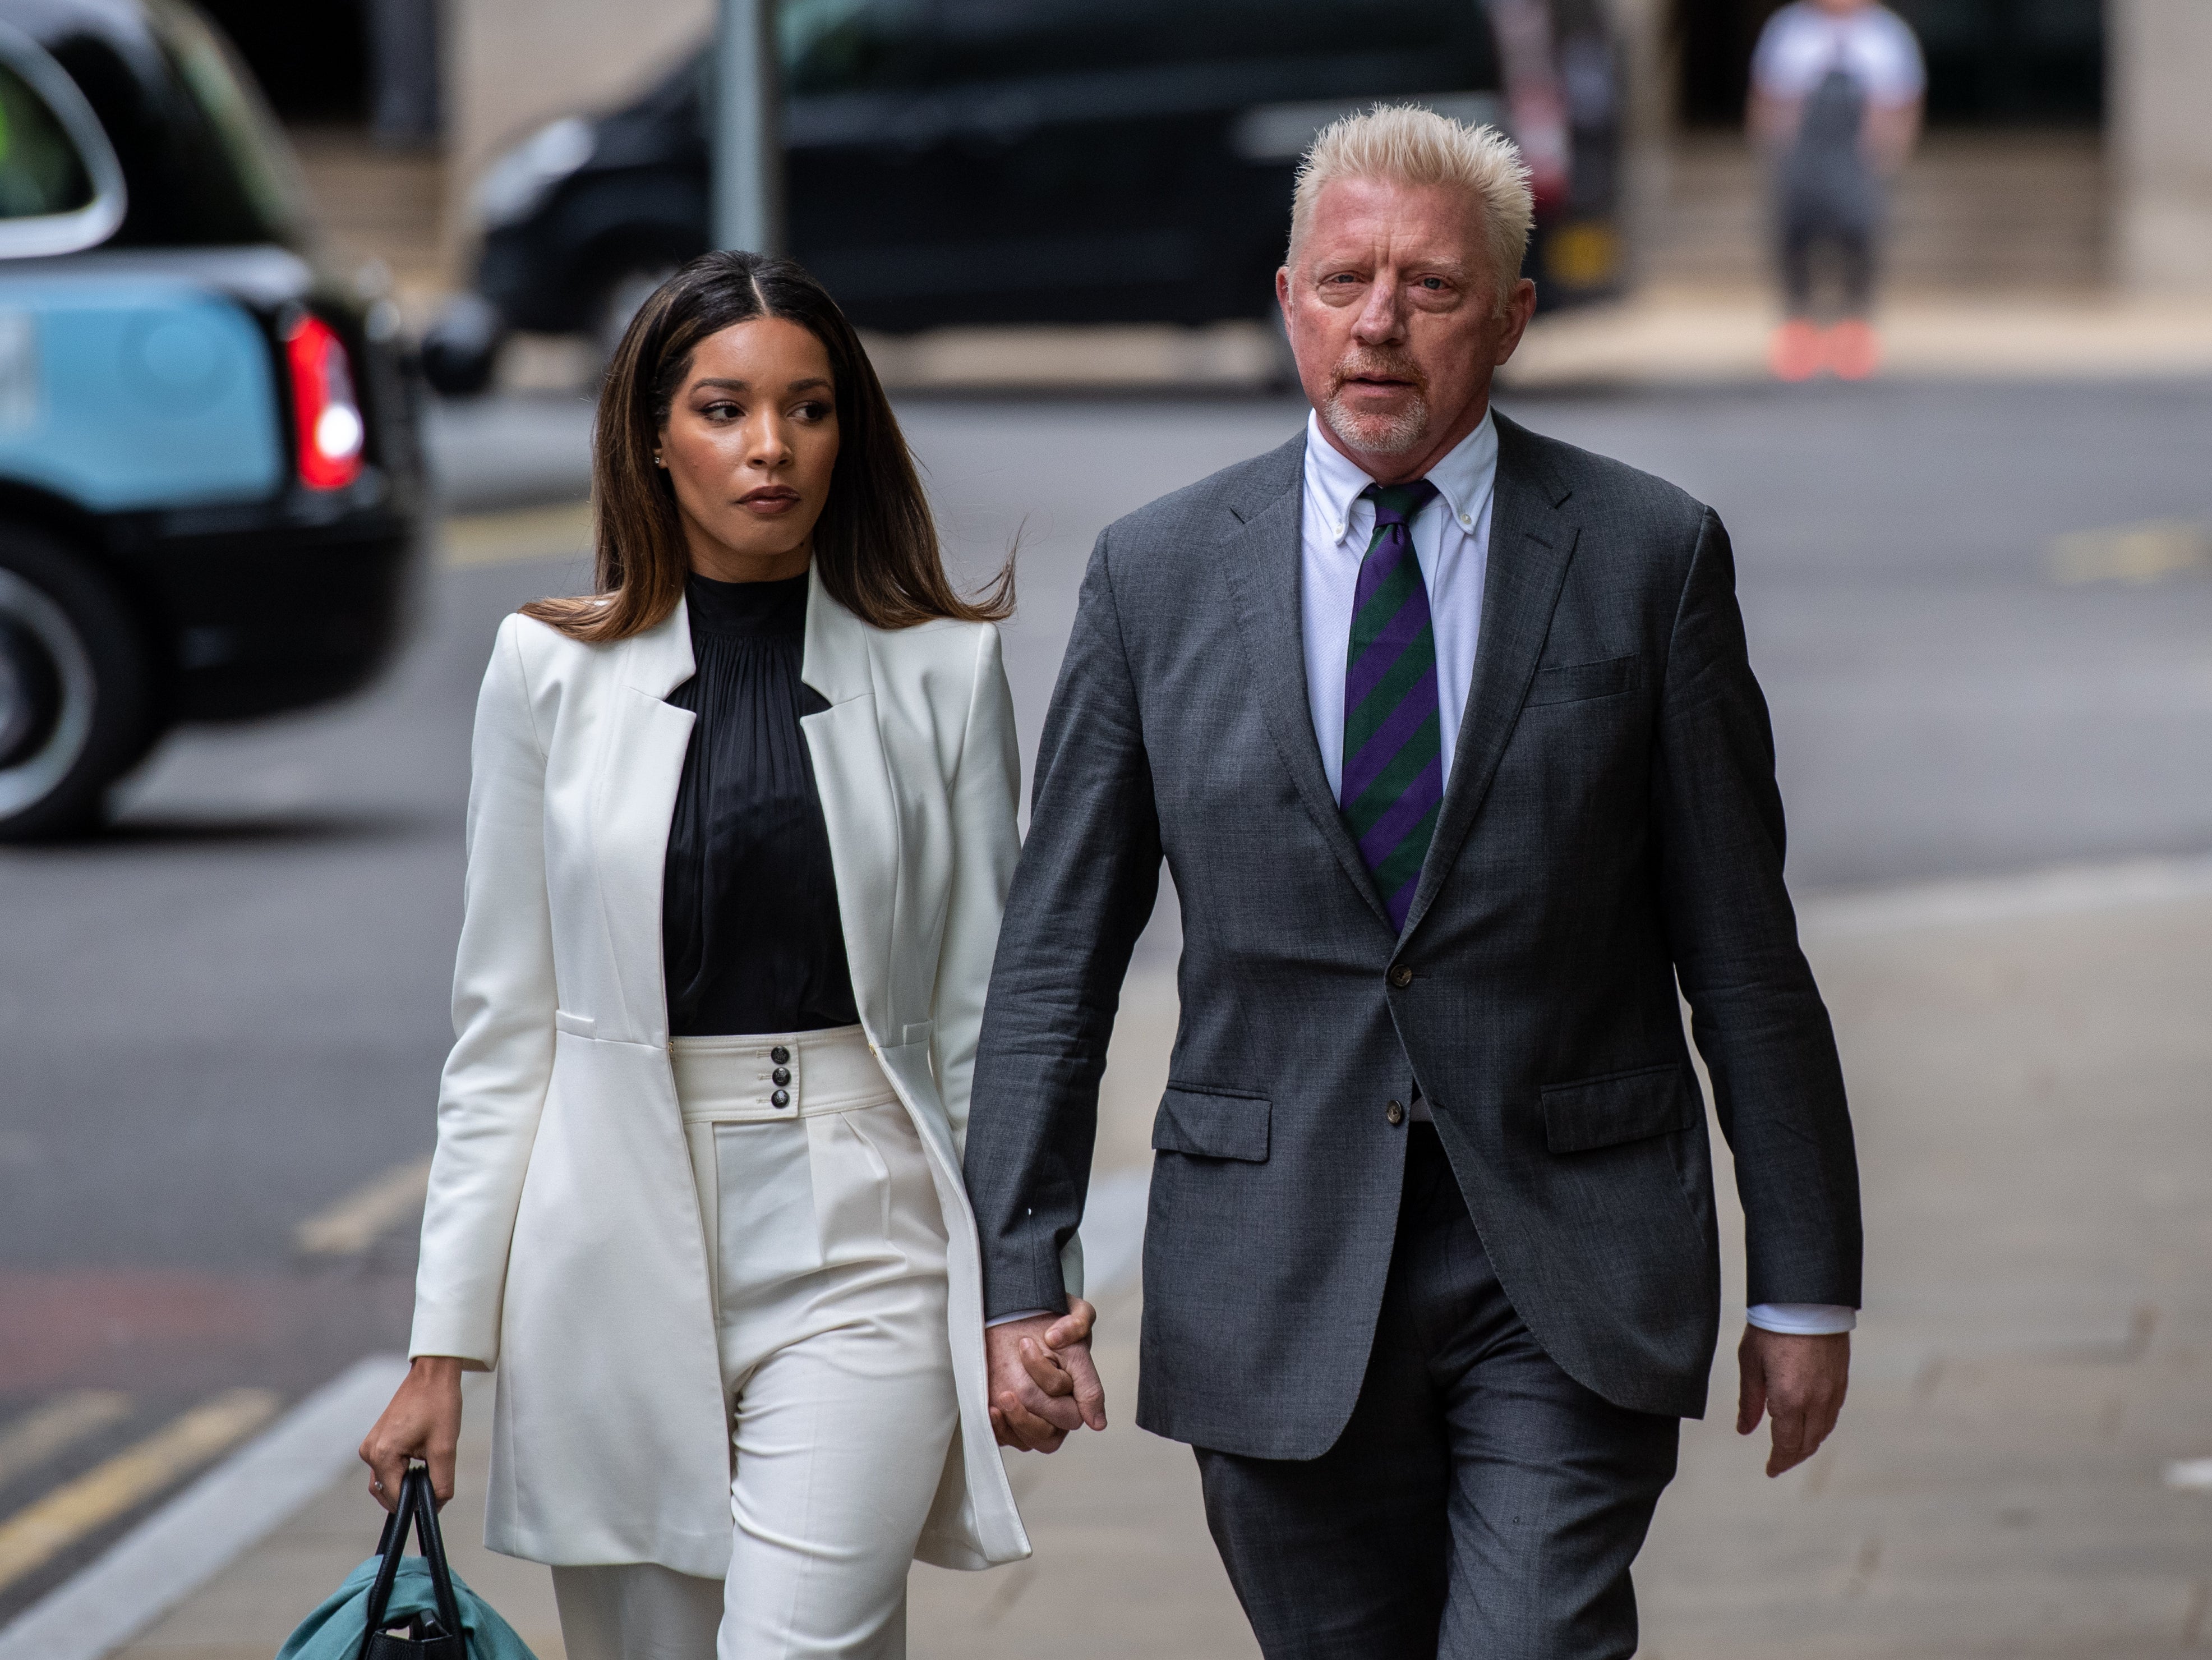 Boris Becker arriving at court with his girlfriend Lilian de Carvalho Monteiro